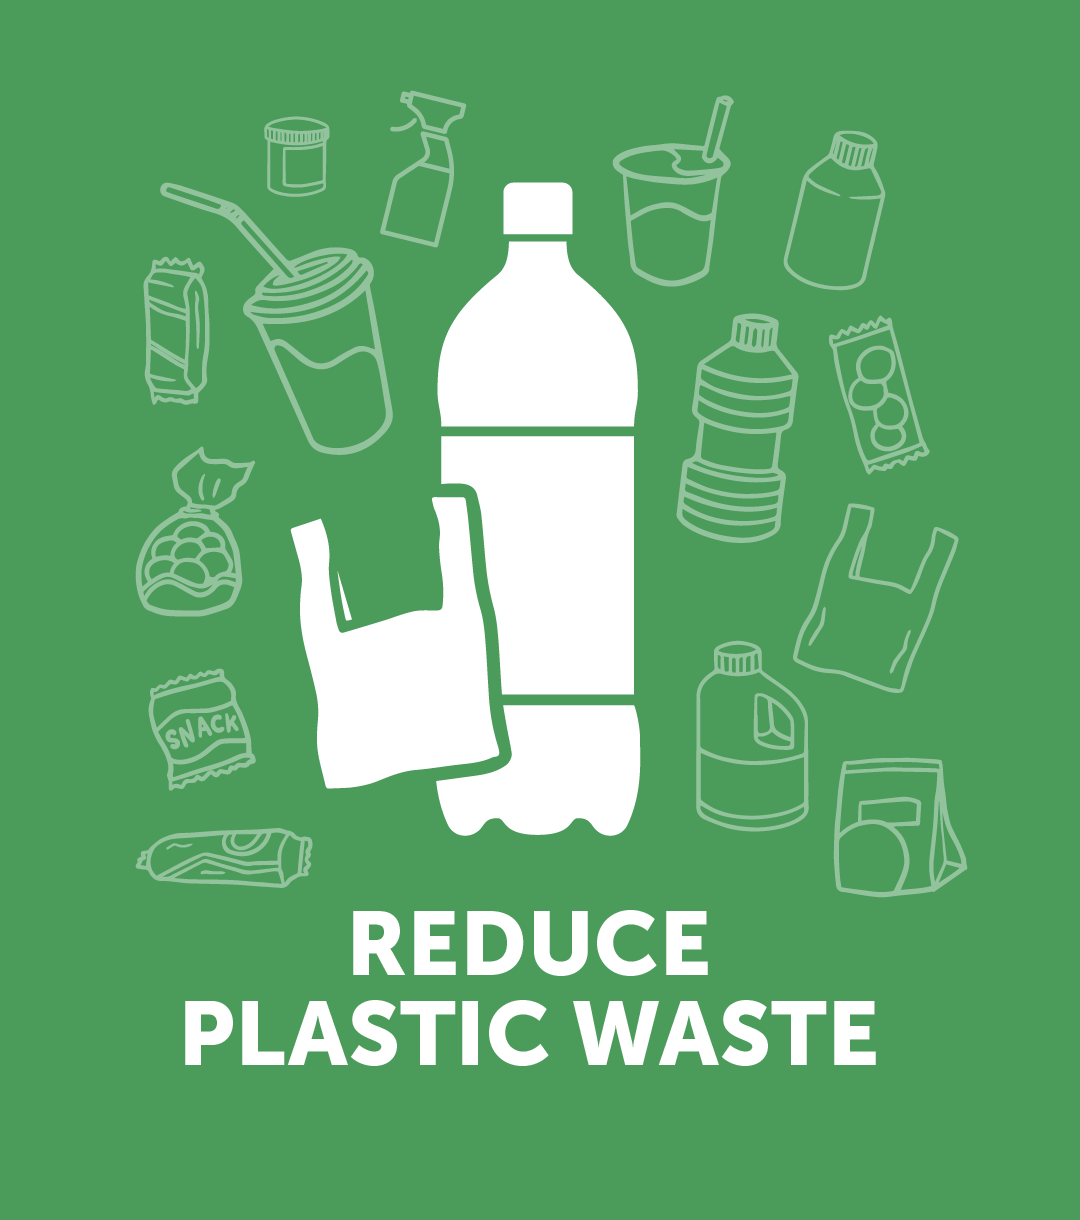 Home reduce. Плакат про пластик. Reducing Plastic waste. Waste to reduce Plastic. Reduce.